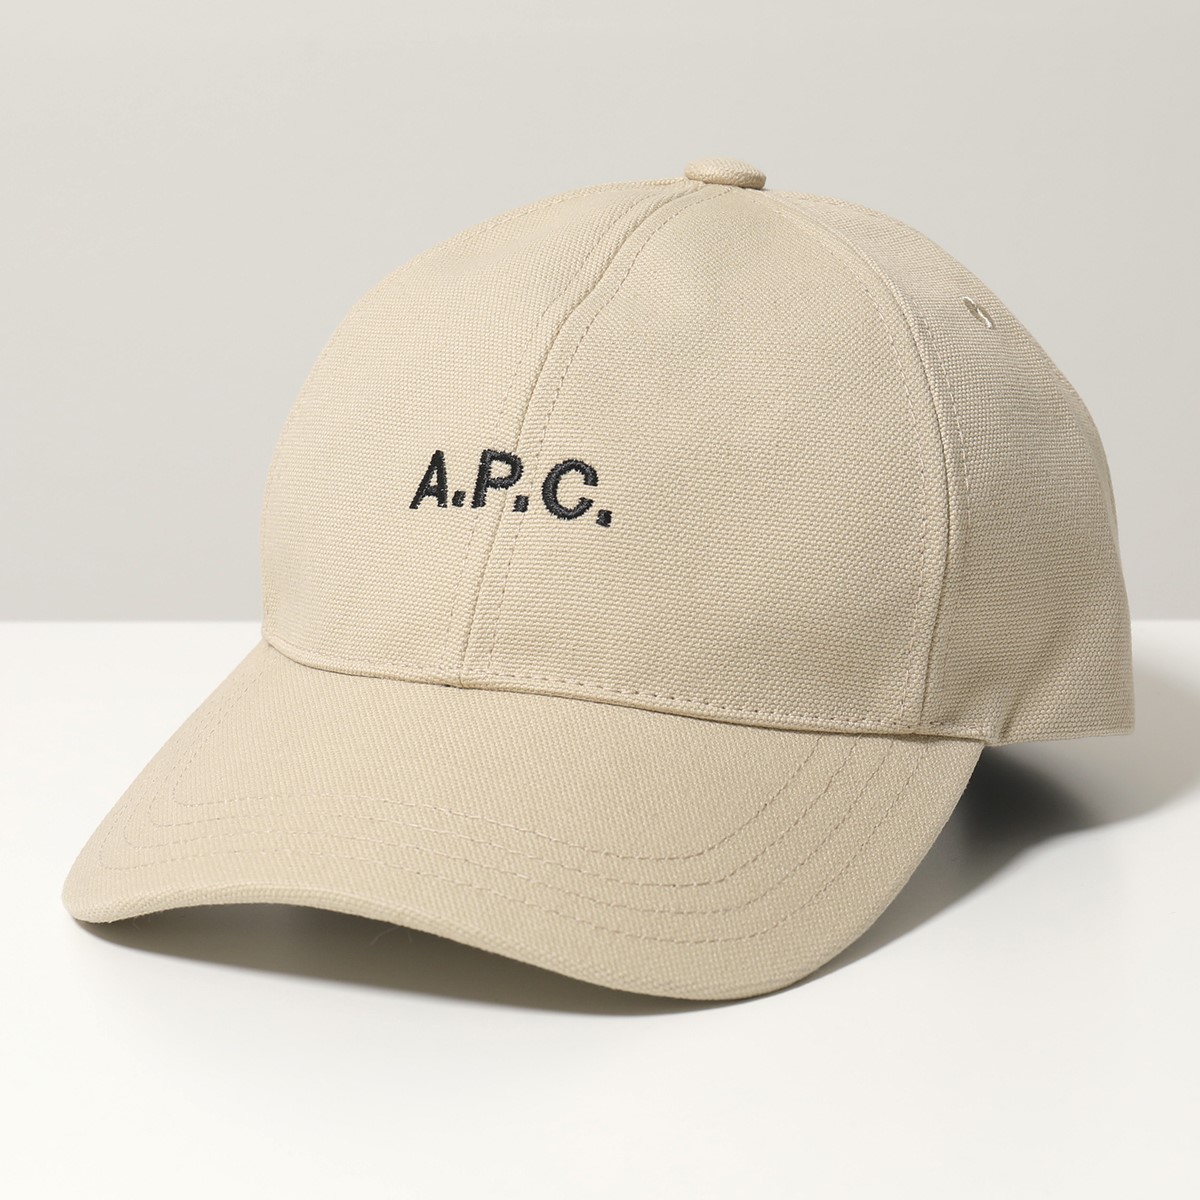 【楽天市場】APC A.P.C. アーペーセー COCPR M24069 casquette charlle ロゴ刺繍 コットン ベースボールキャップ 帽子 BAA/BEIGE メンズ